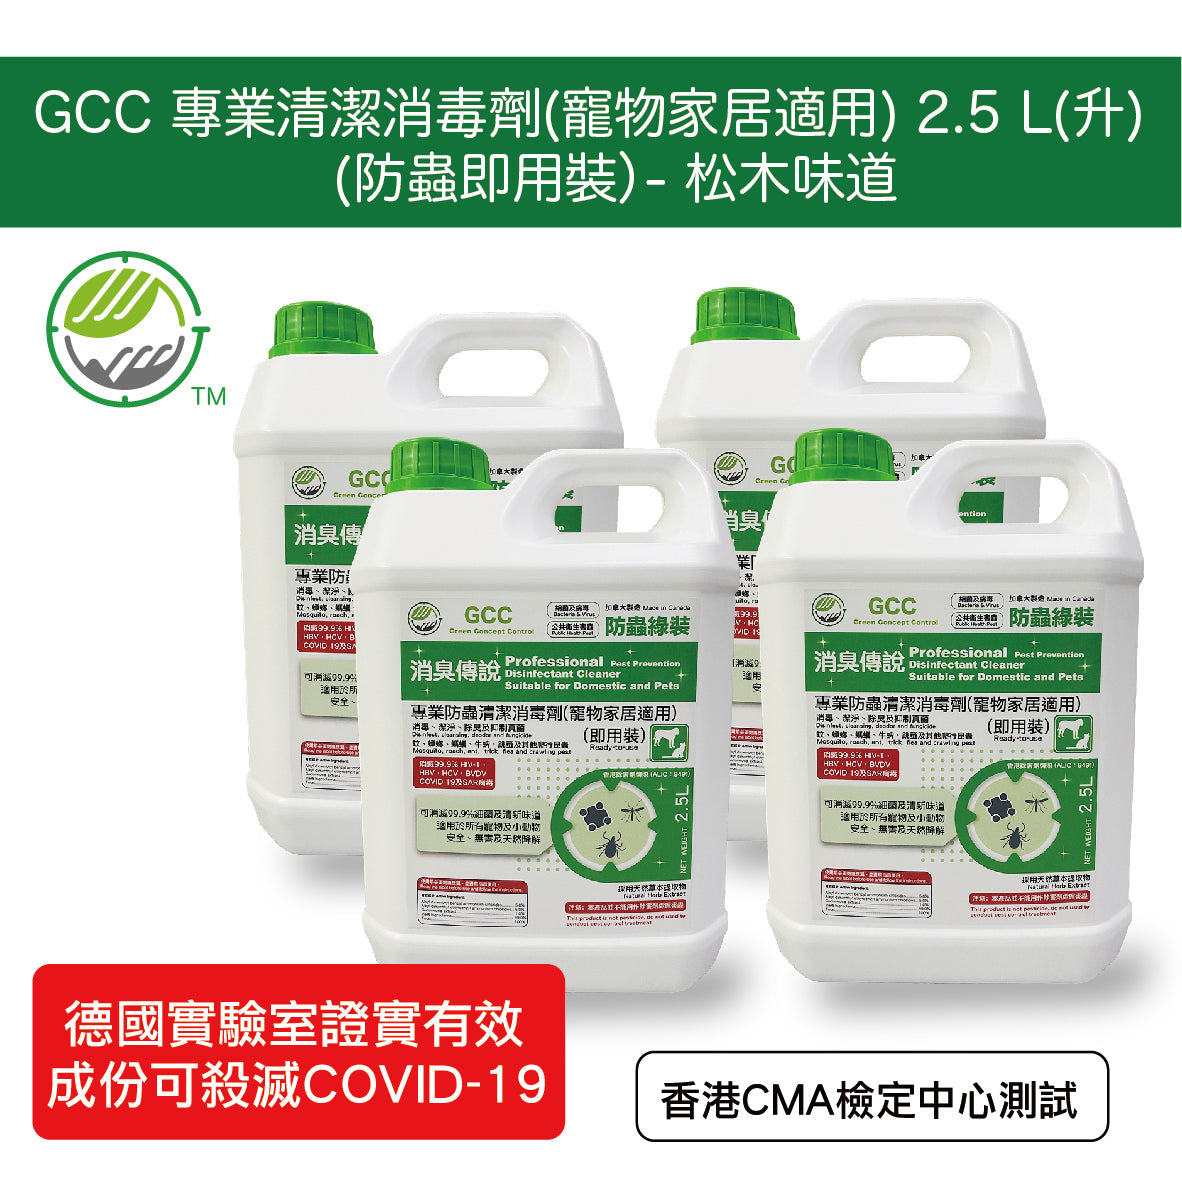 GCC 專業清潔消毒劑(寵物家居適用) 防蟲綠裝 2.5L